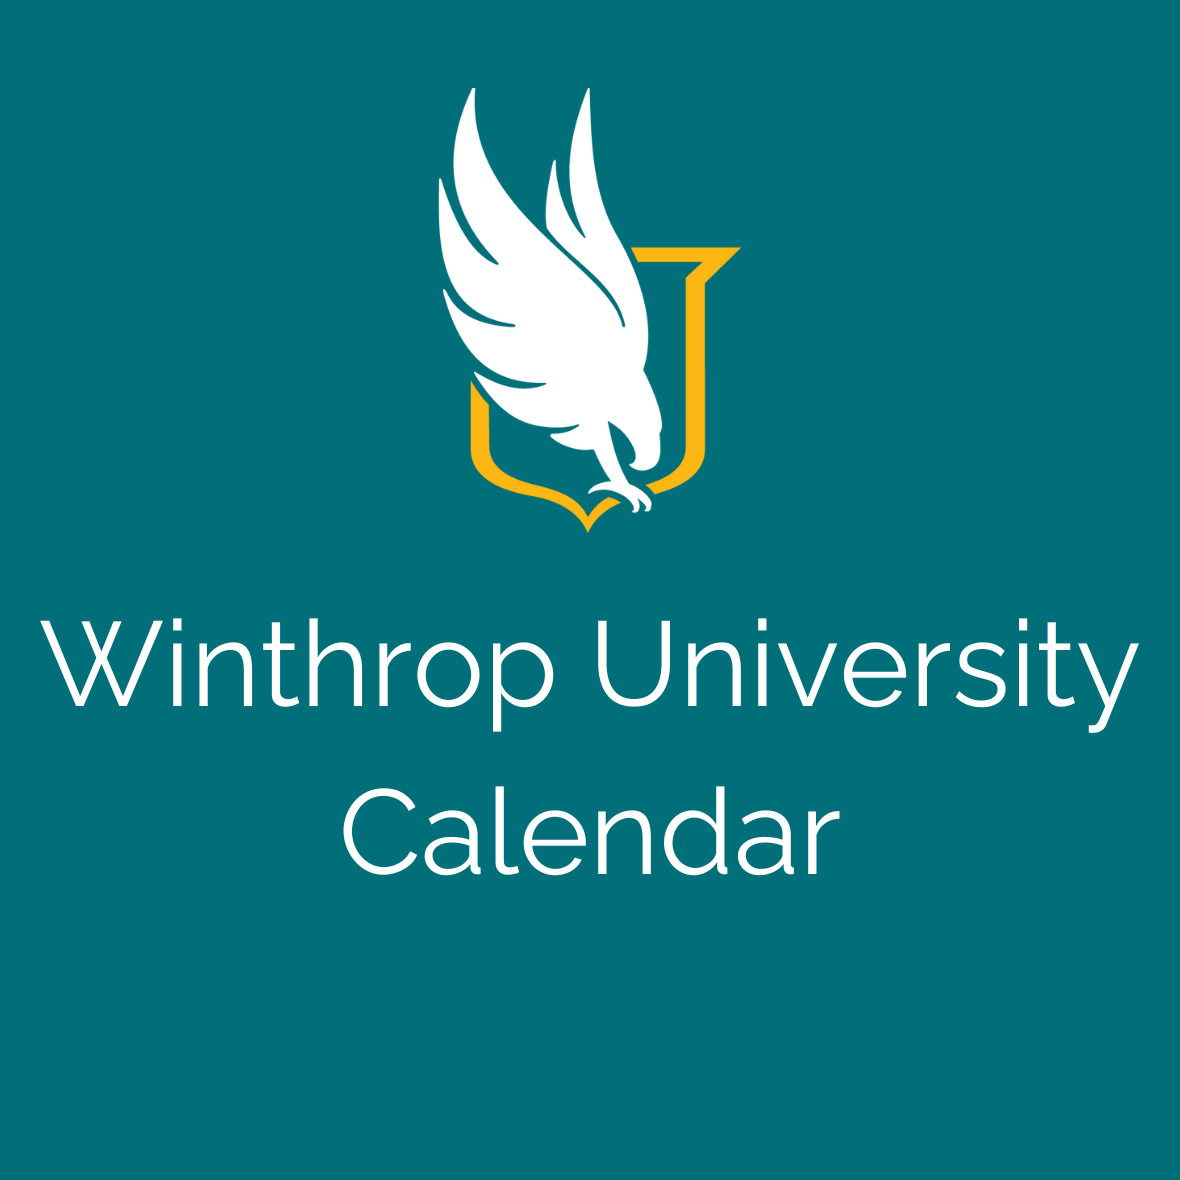 Winthrop University Calendar